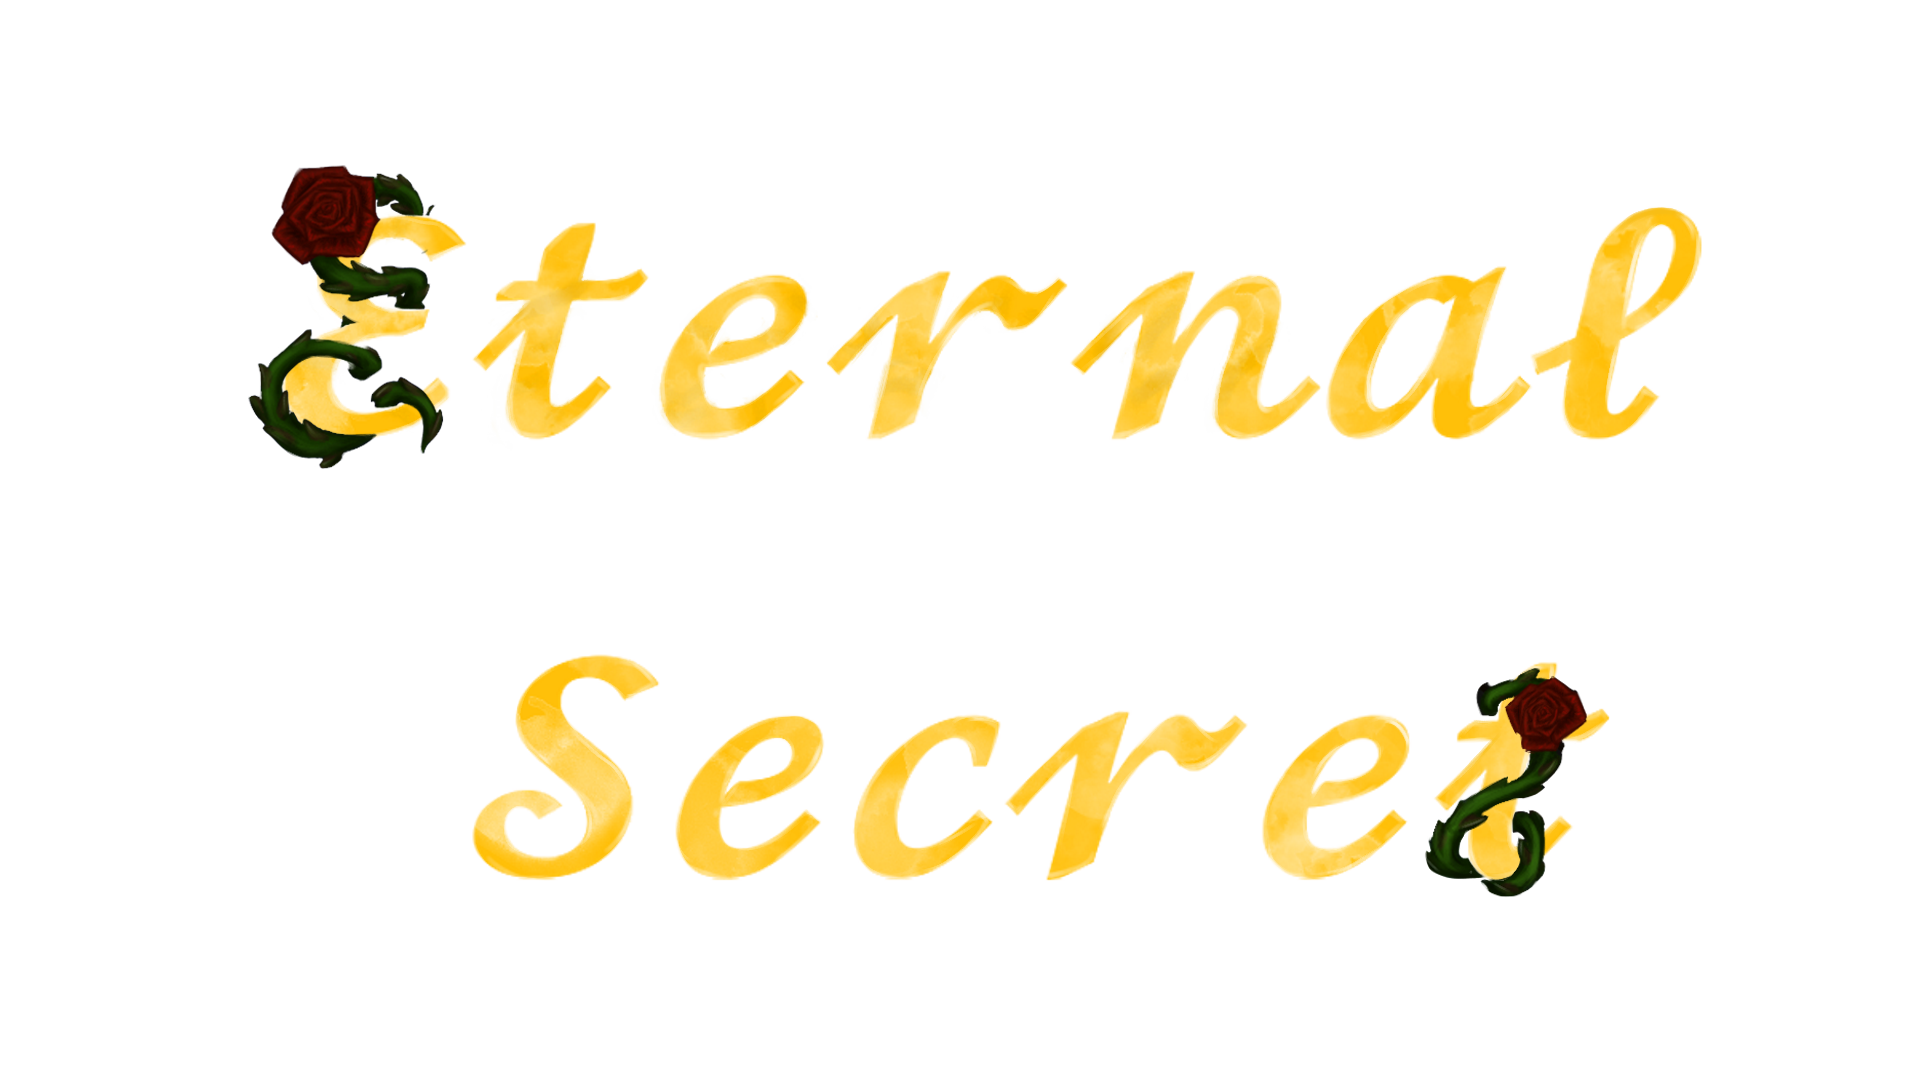 Eternal Secret